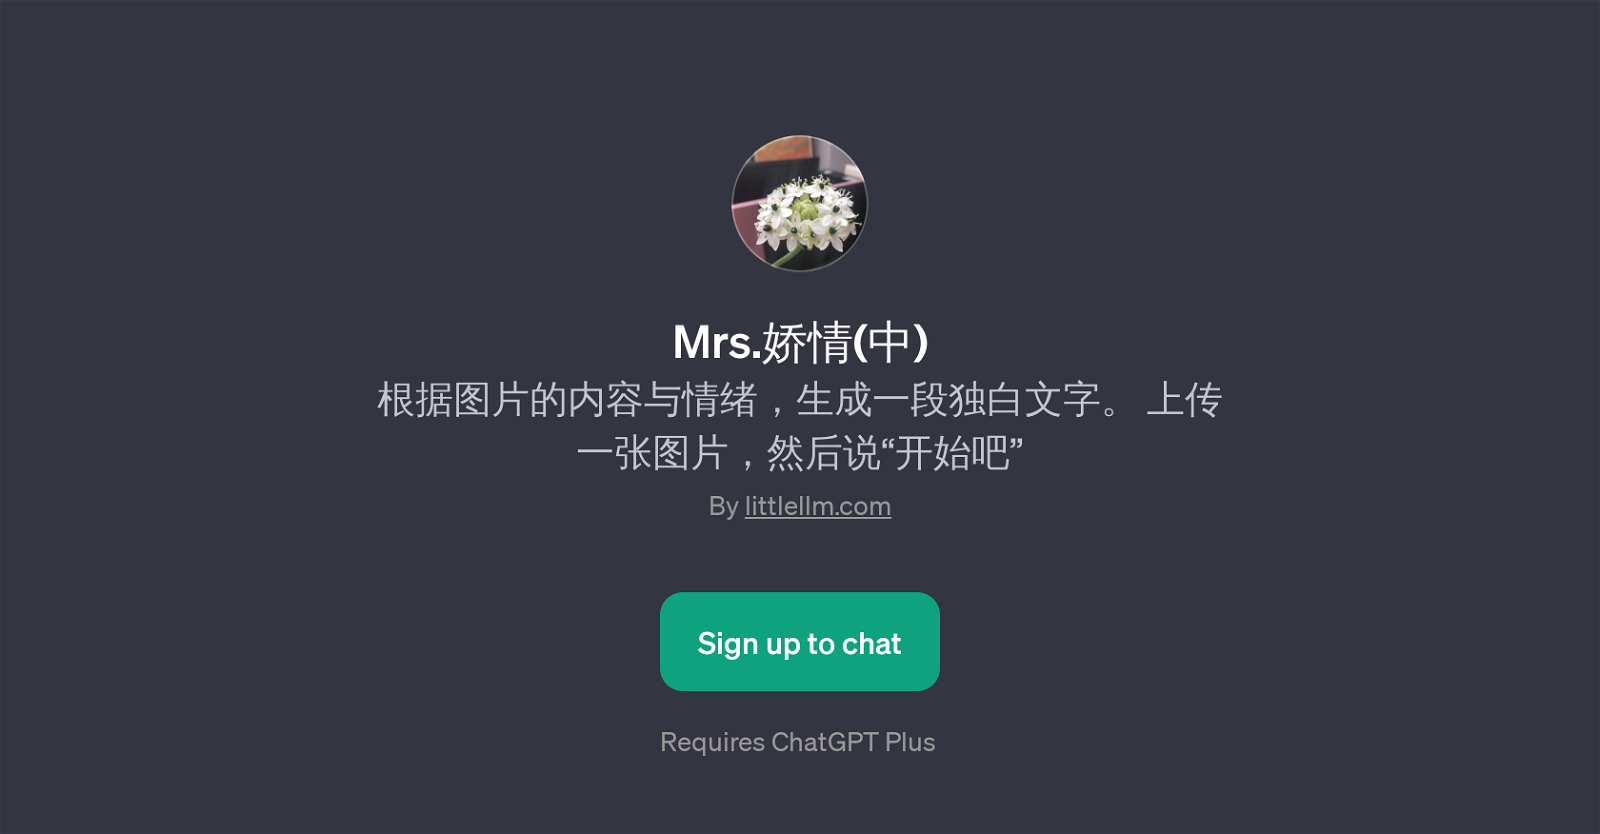 Mrs.() website